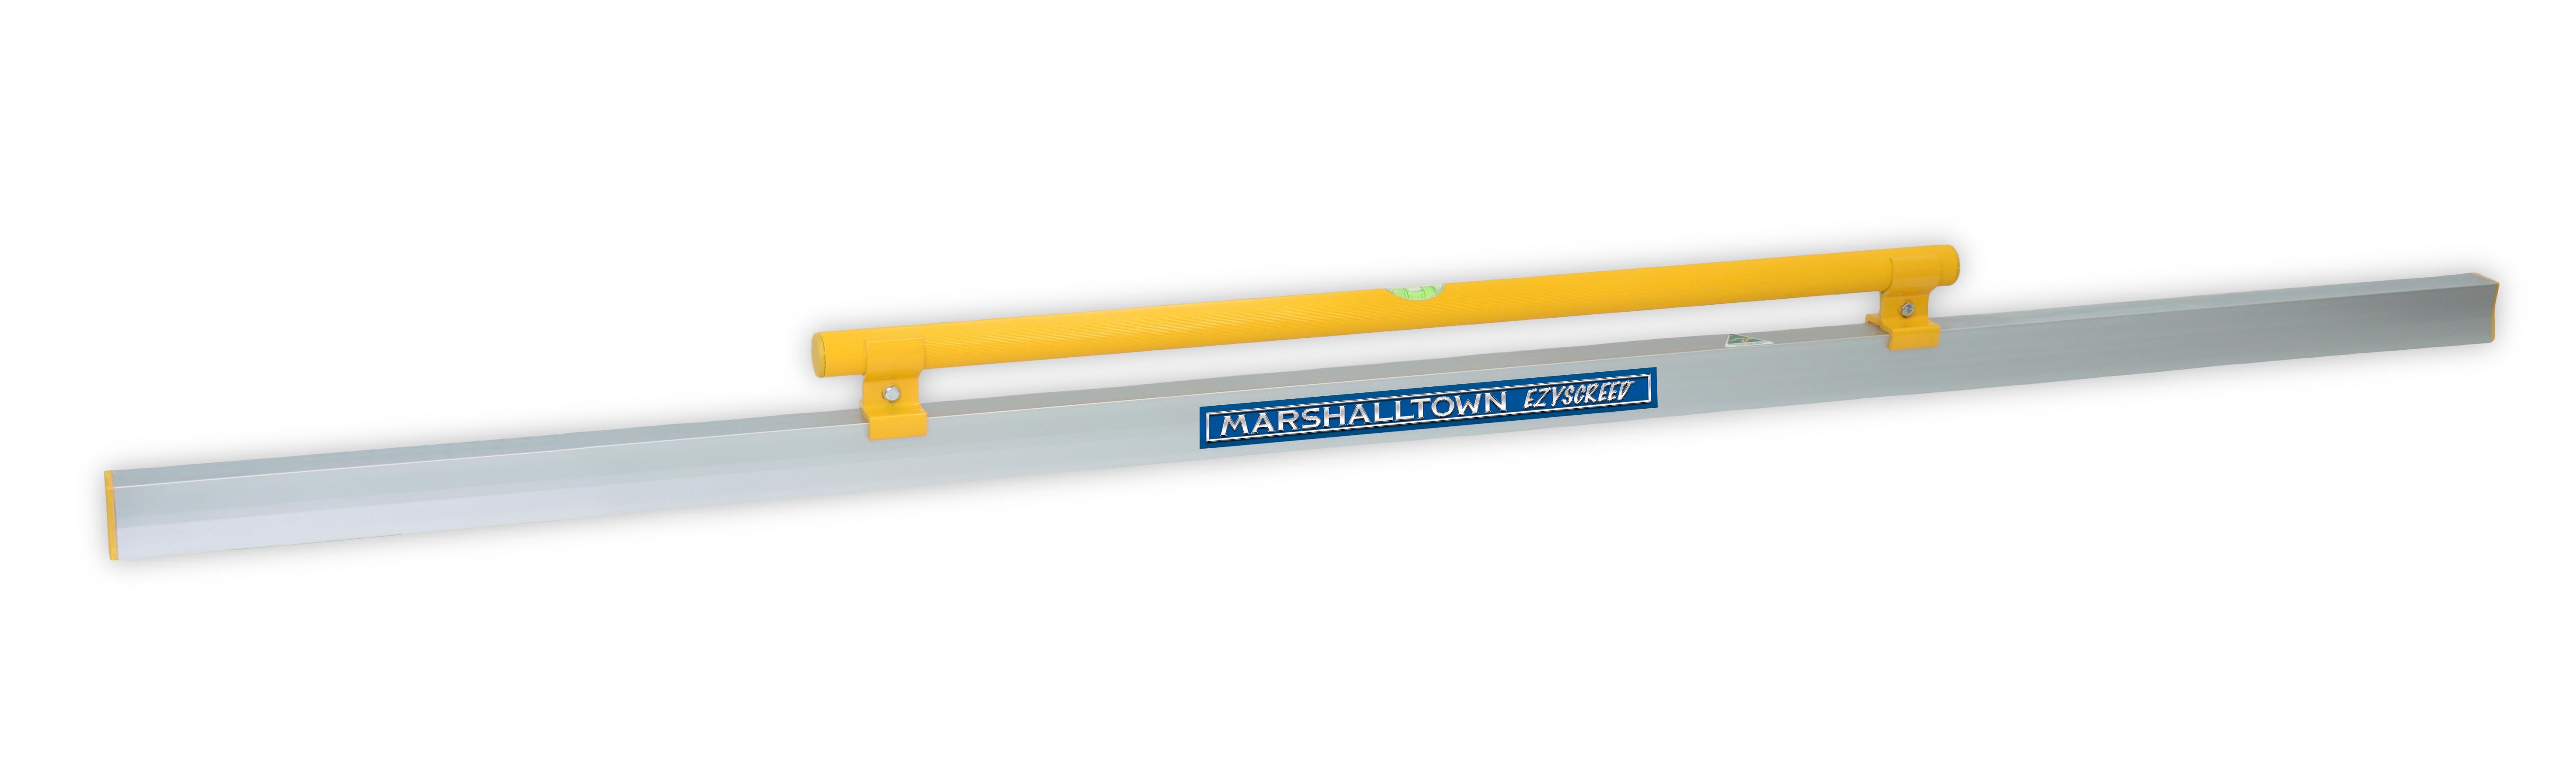 Marshalltown (28399) product